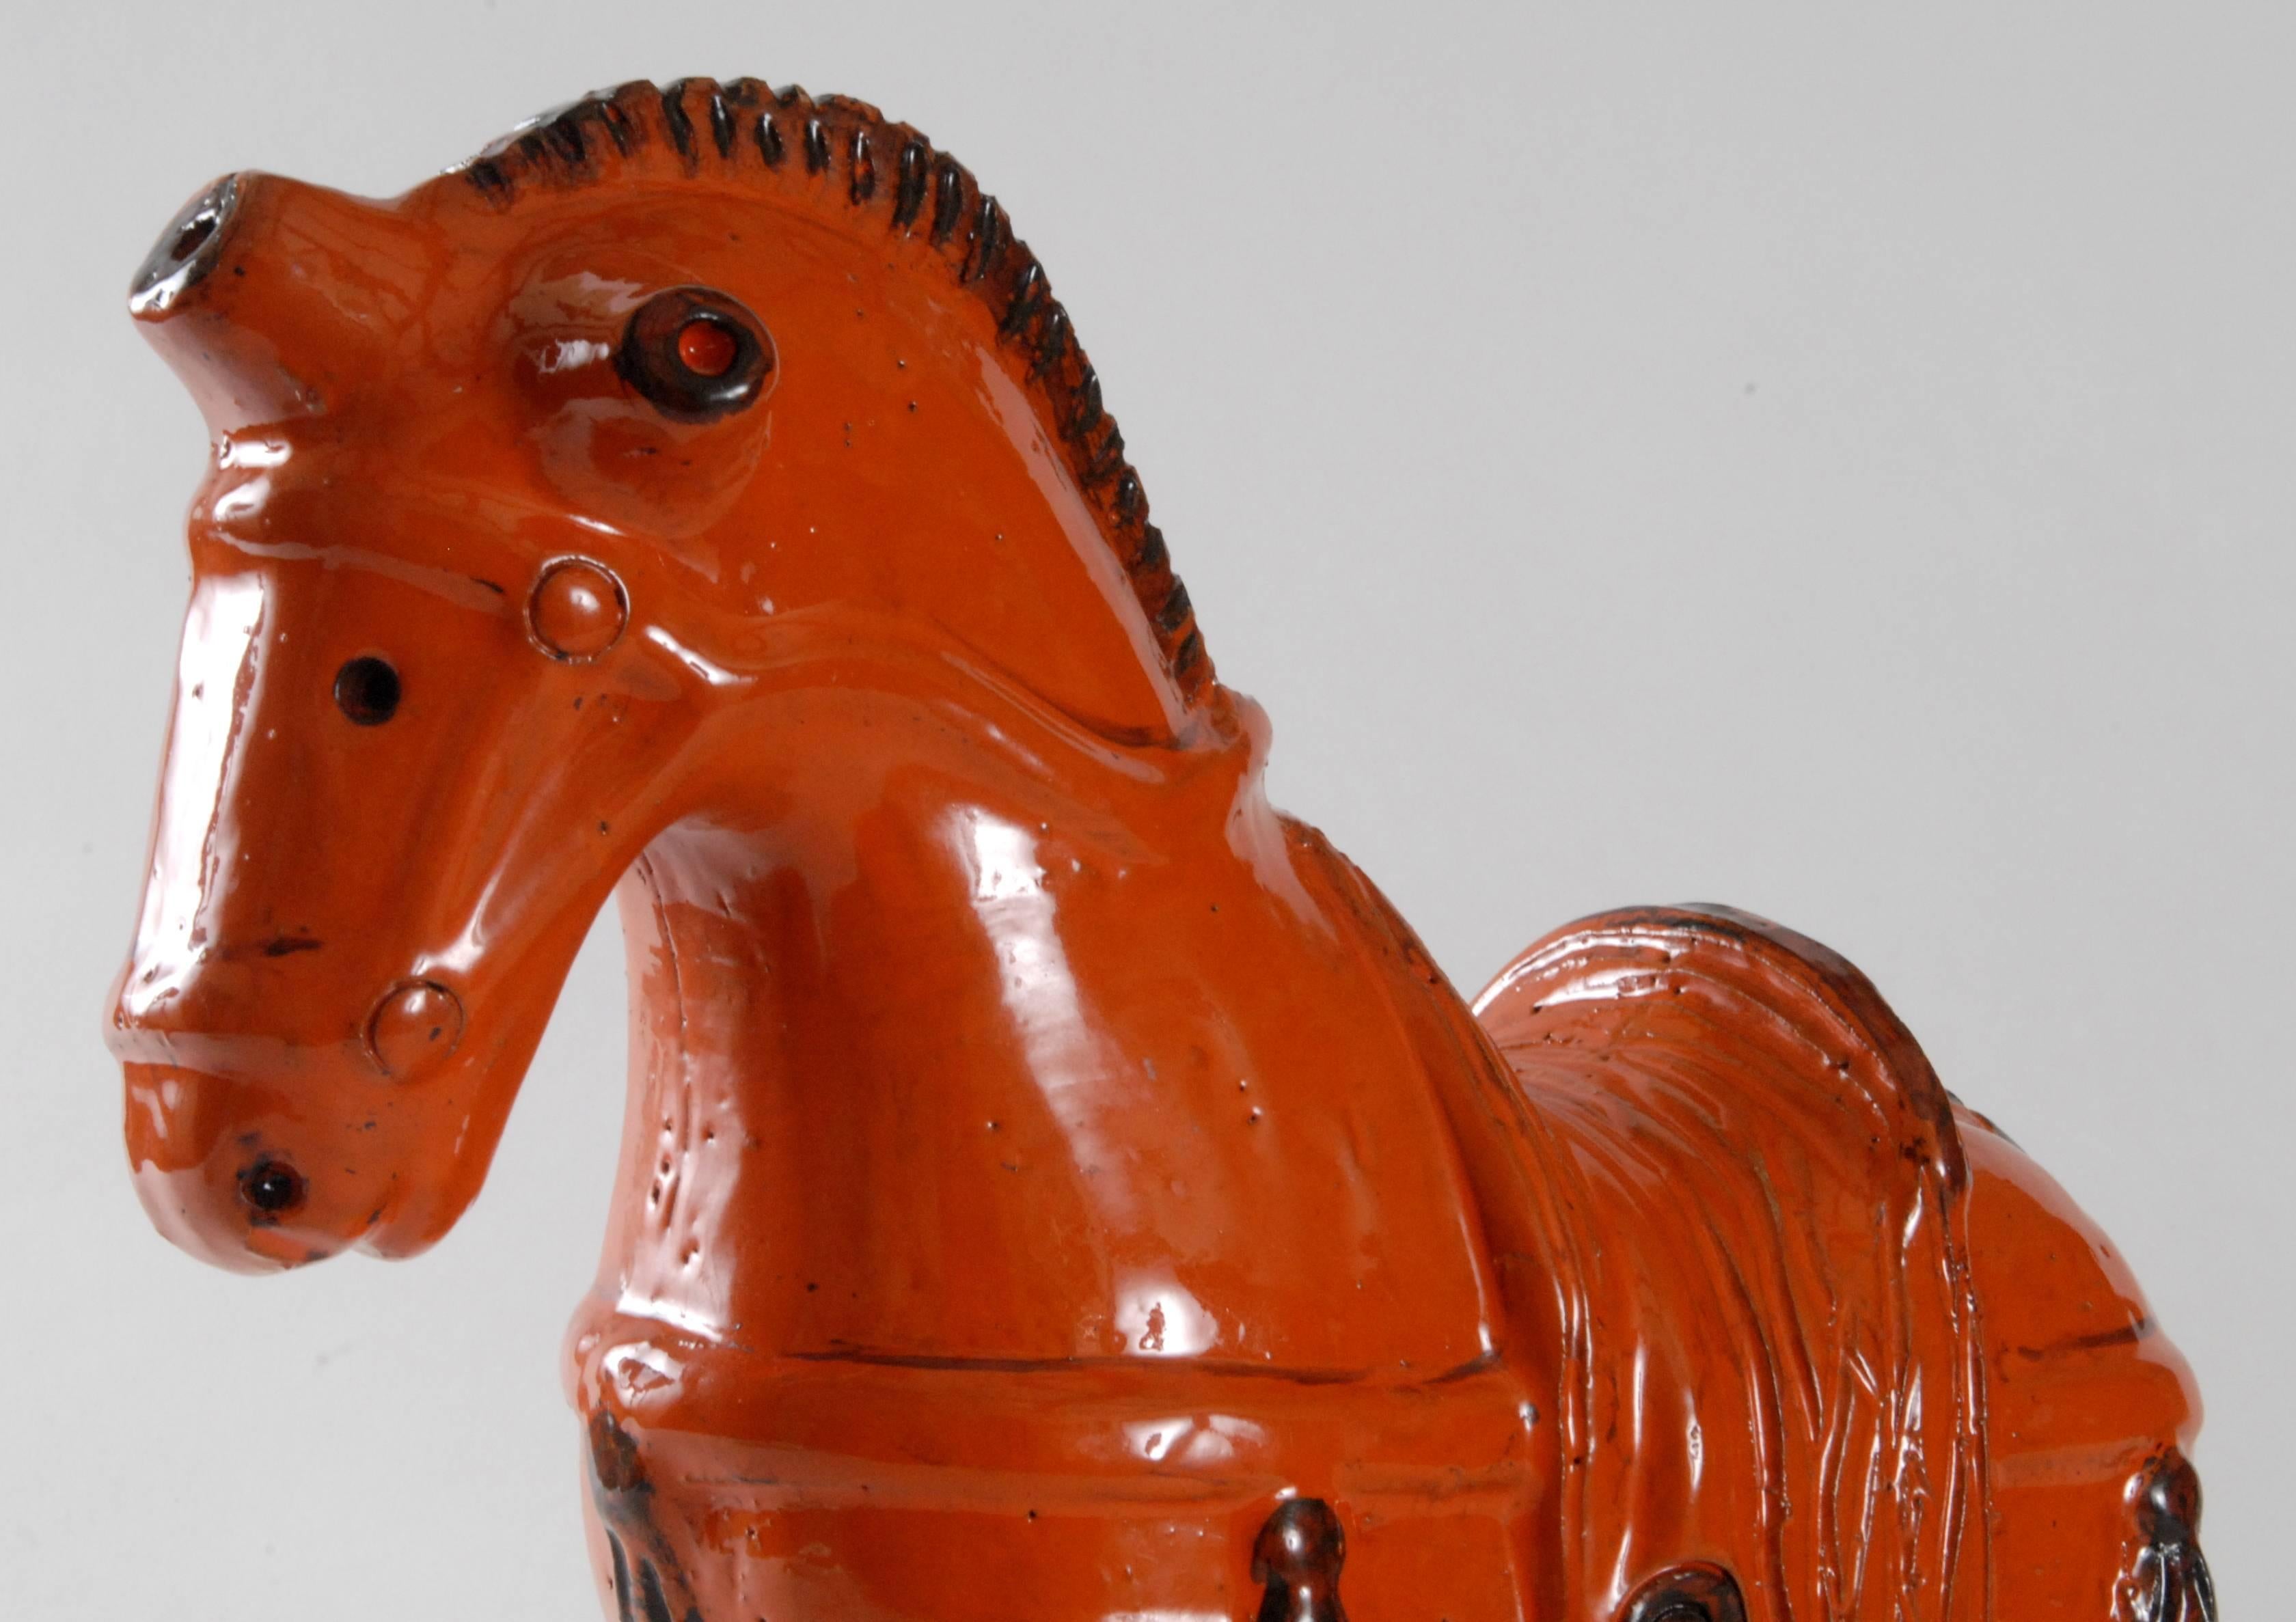 Mid-Century Modern Bitossi Londi Design, Italy, circa 1968 Orange Horse